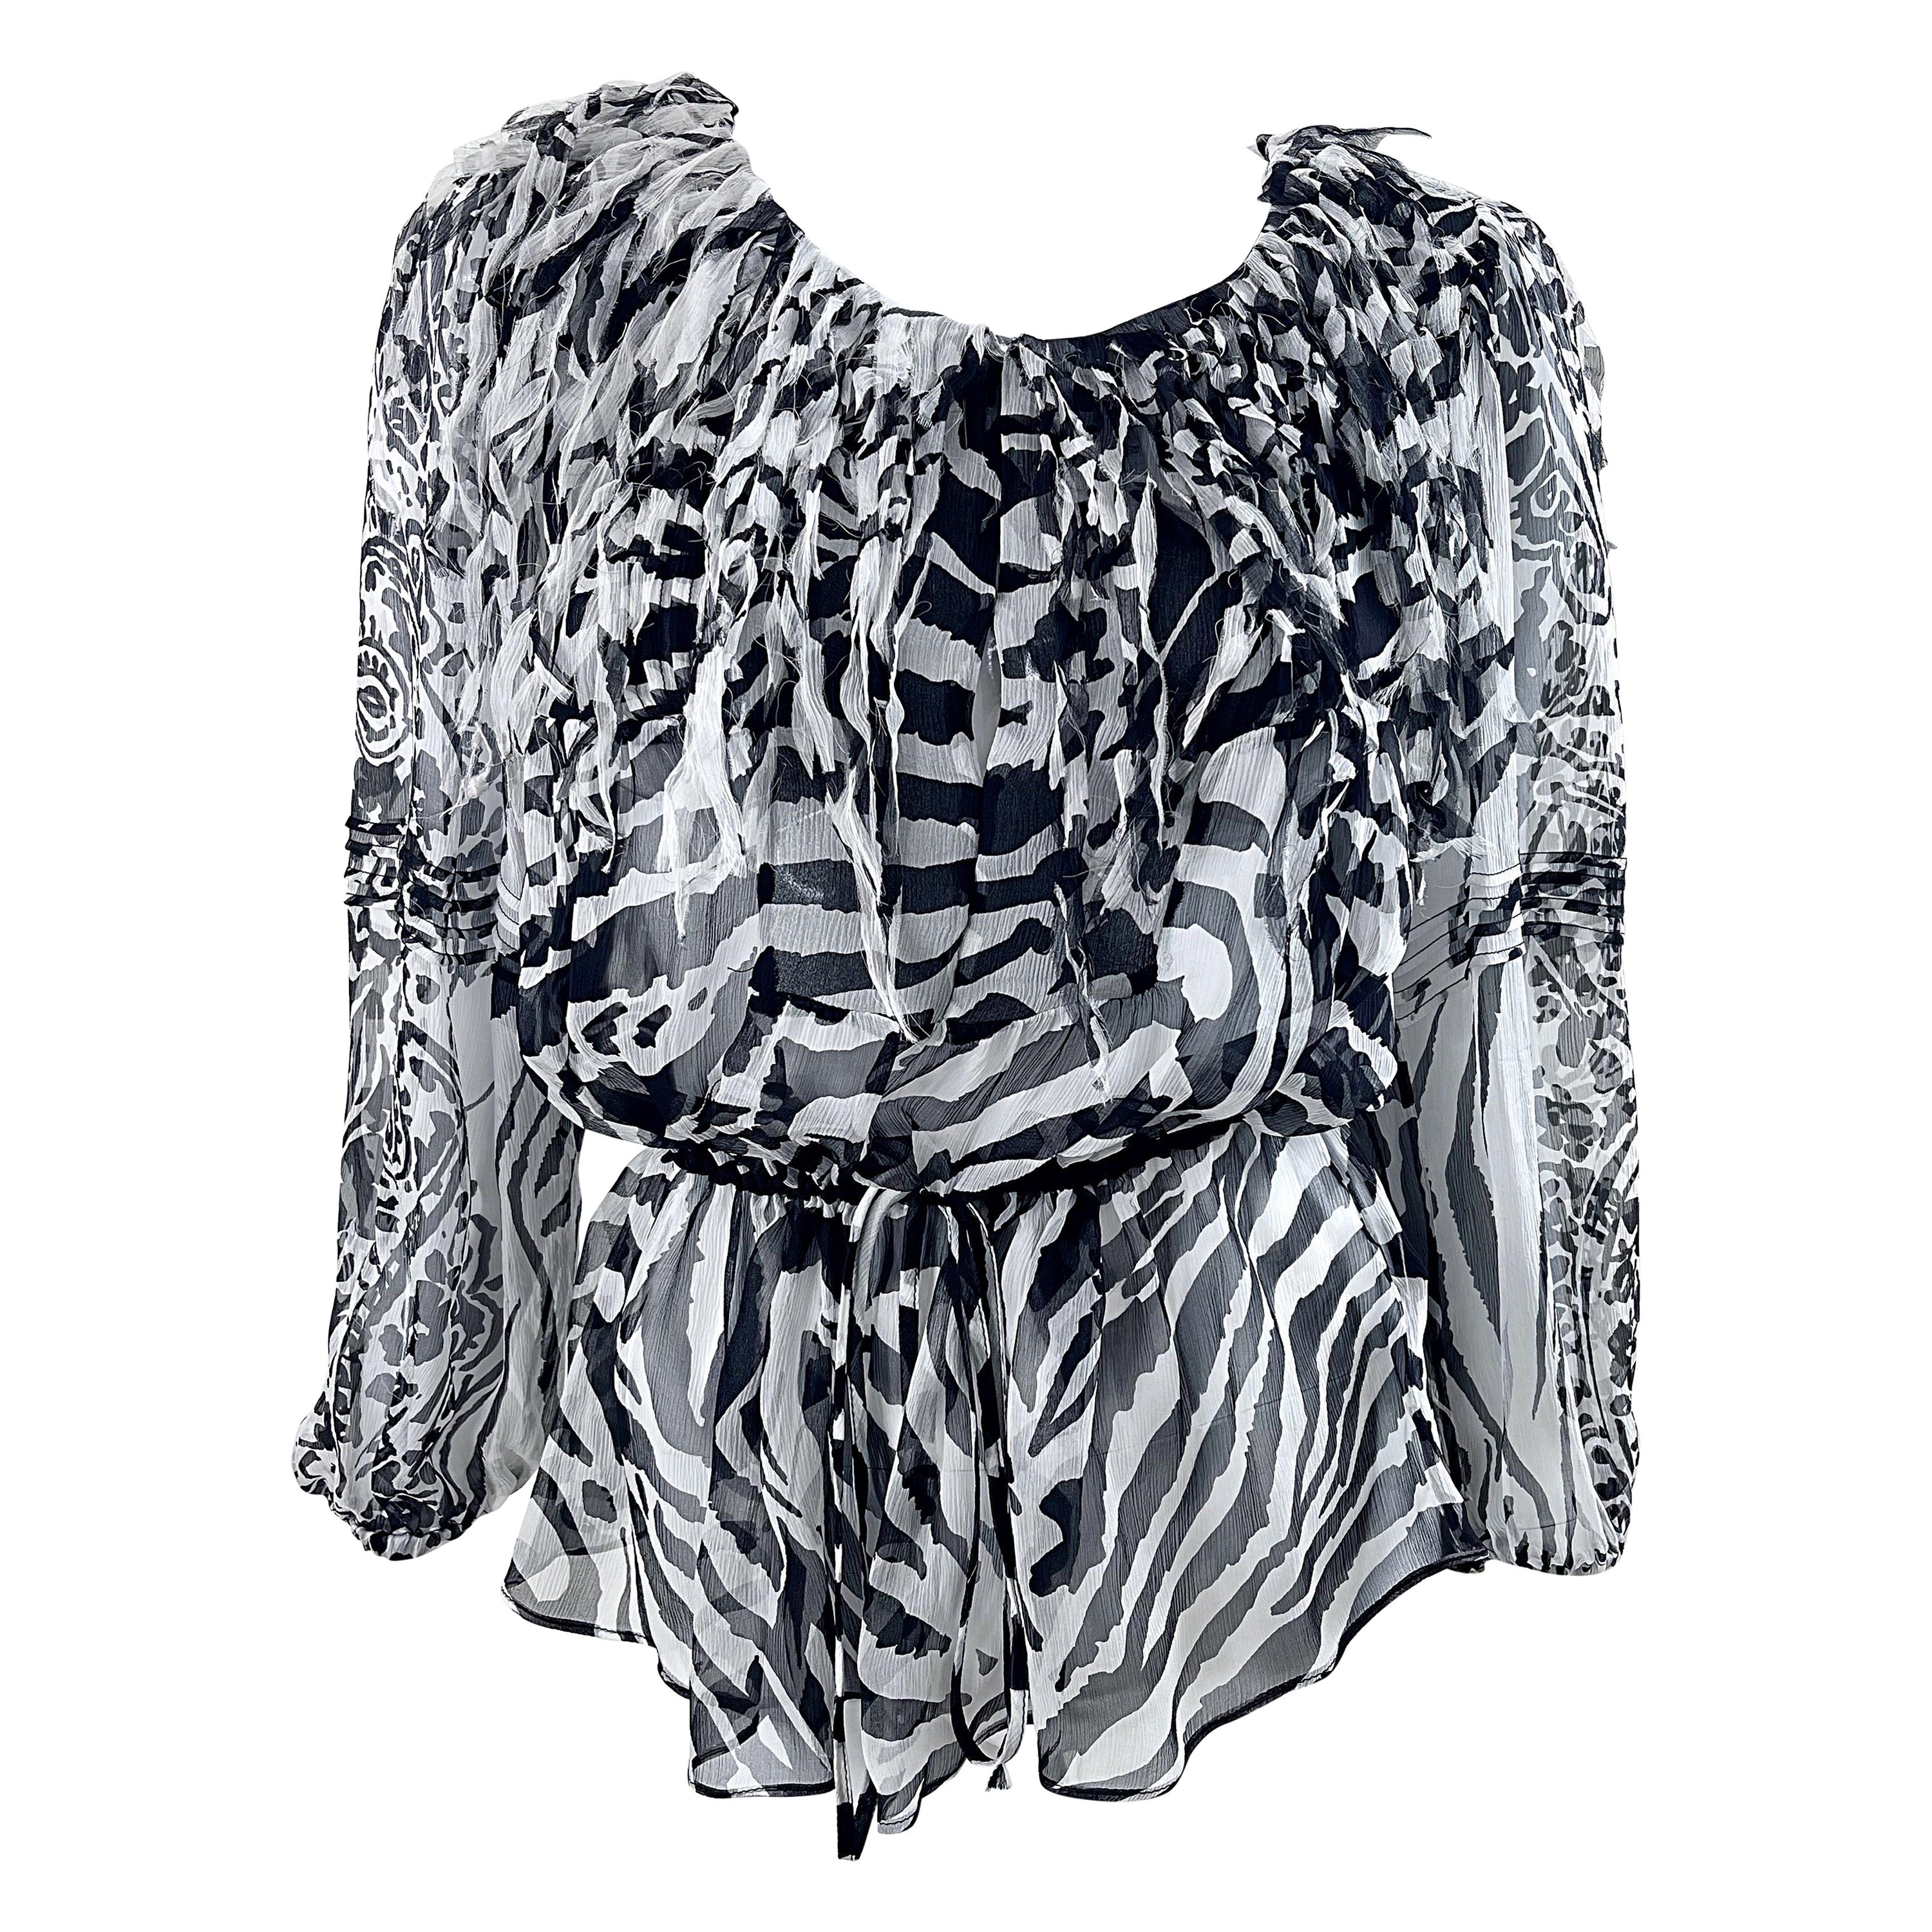 Blumarine Fall 2010 Zebra Print Black and White Fringe Silk Chiffon Blouse Top For Sale